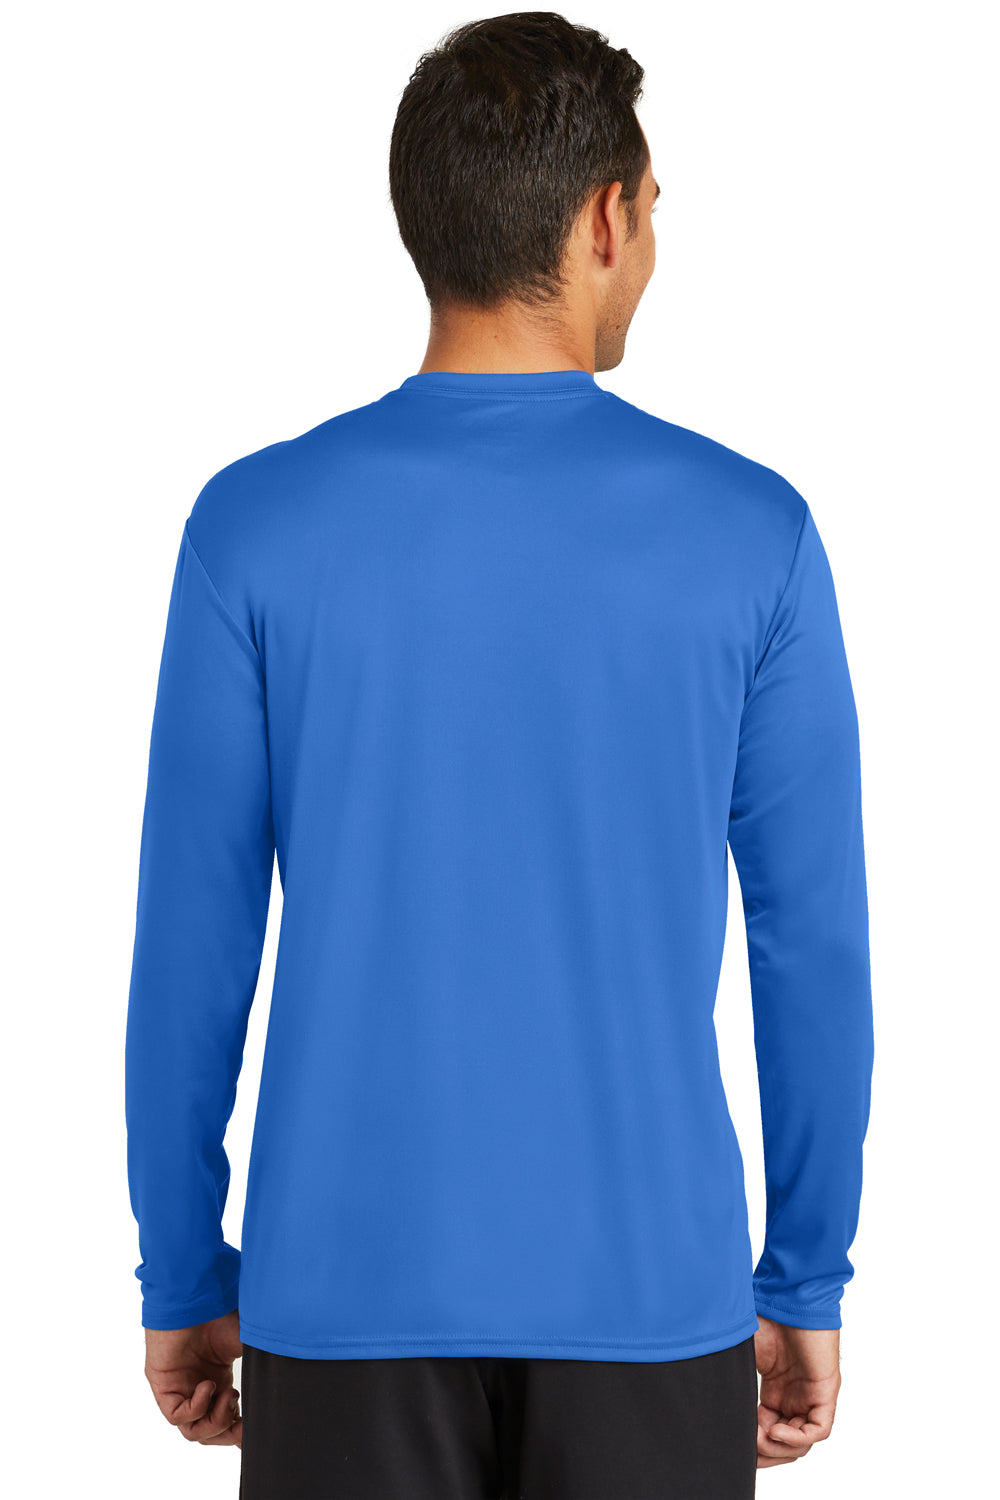 Port & Company PC380LS Mens Dry Zone Performance Moisture Wicking Long Sleeve Crewneck T-Shirt Royal Blue Back